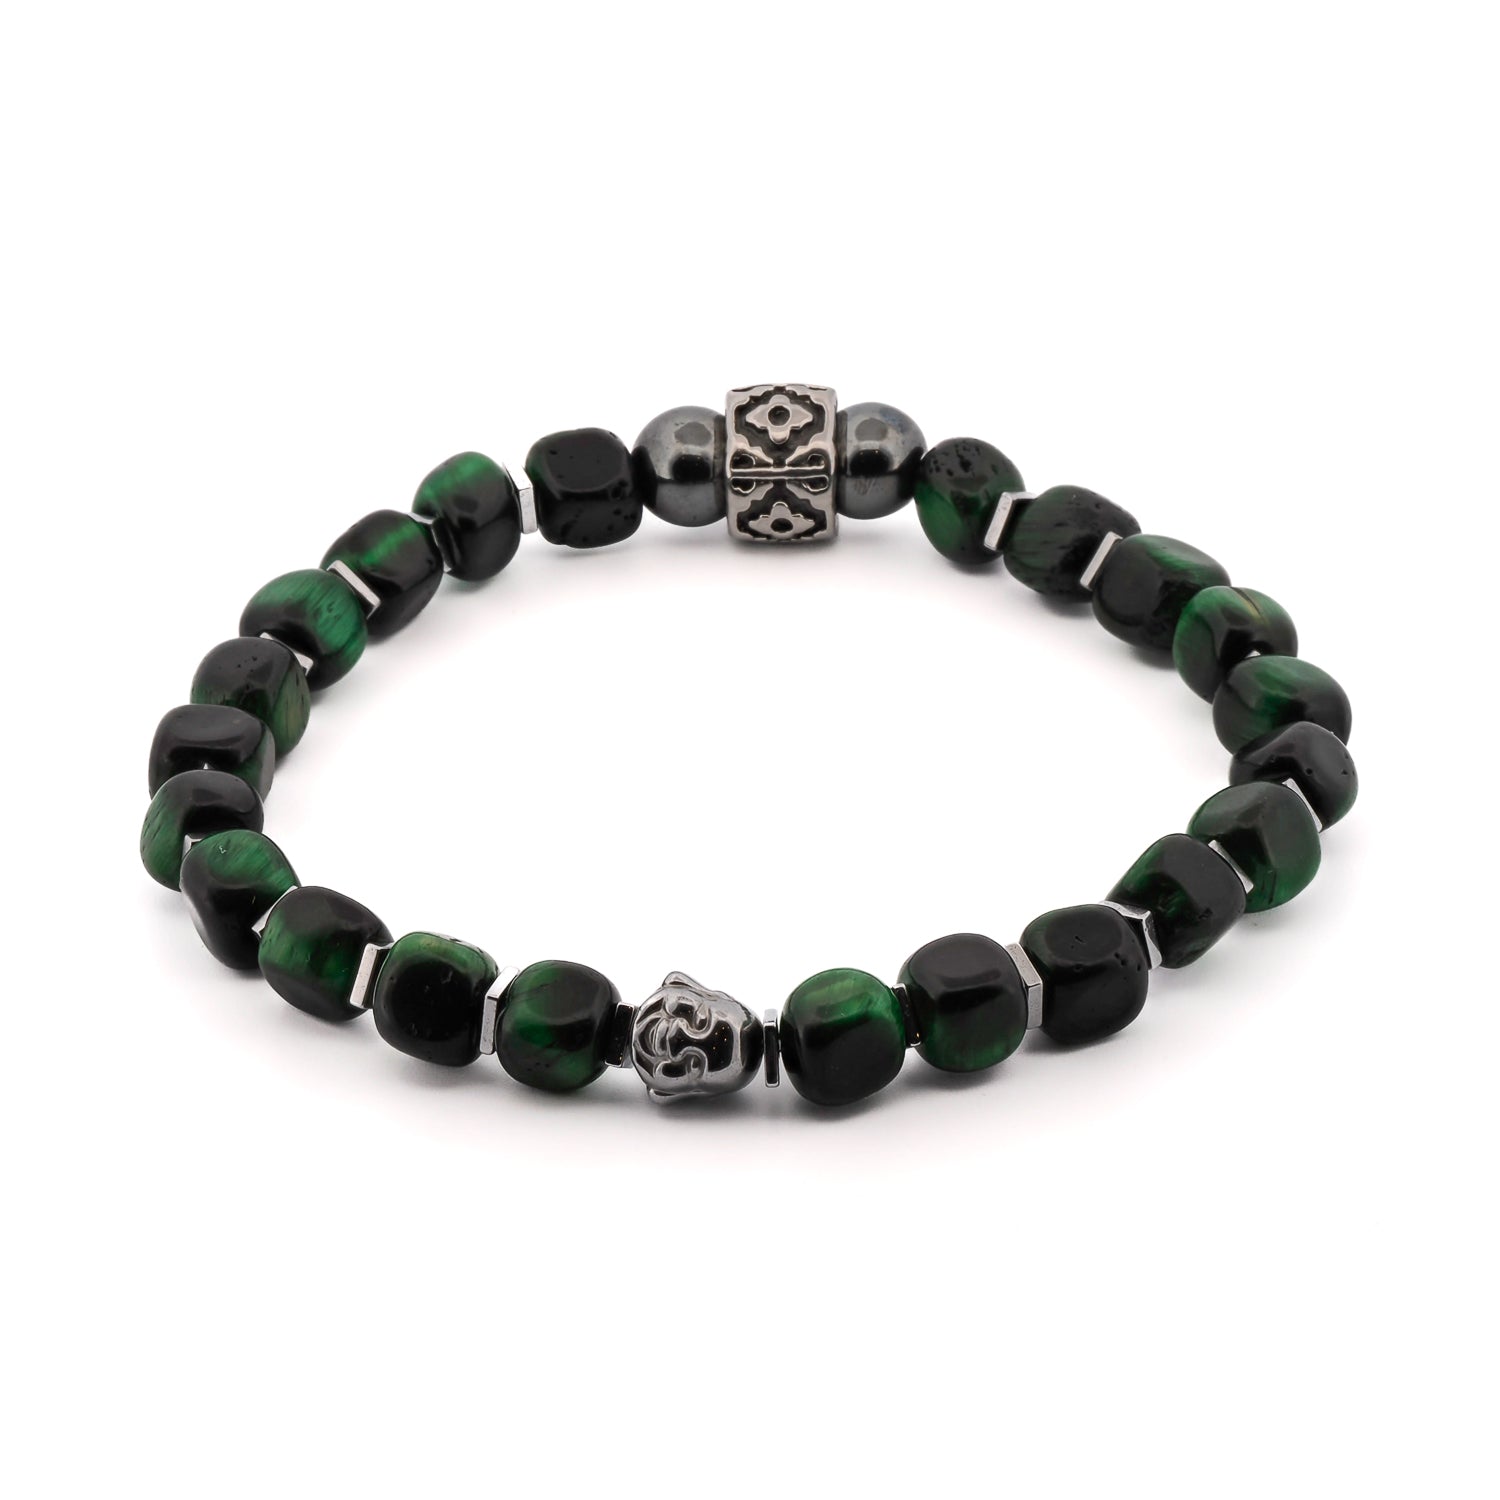 Green Tiger's Eye Buddha Bracelet featuring 8mm green tiger's eye beads and a hematite stone Buddha bead